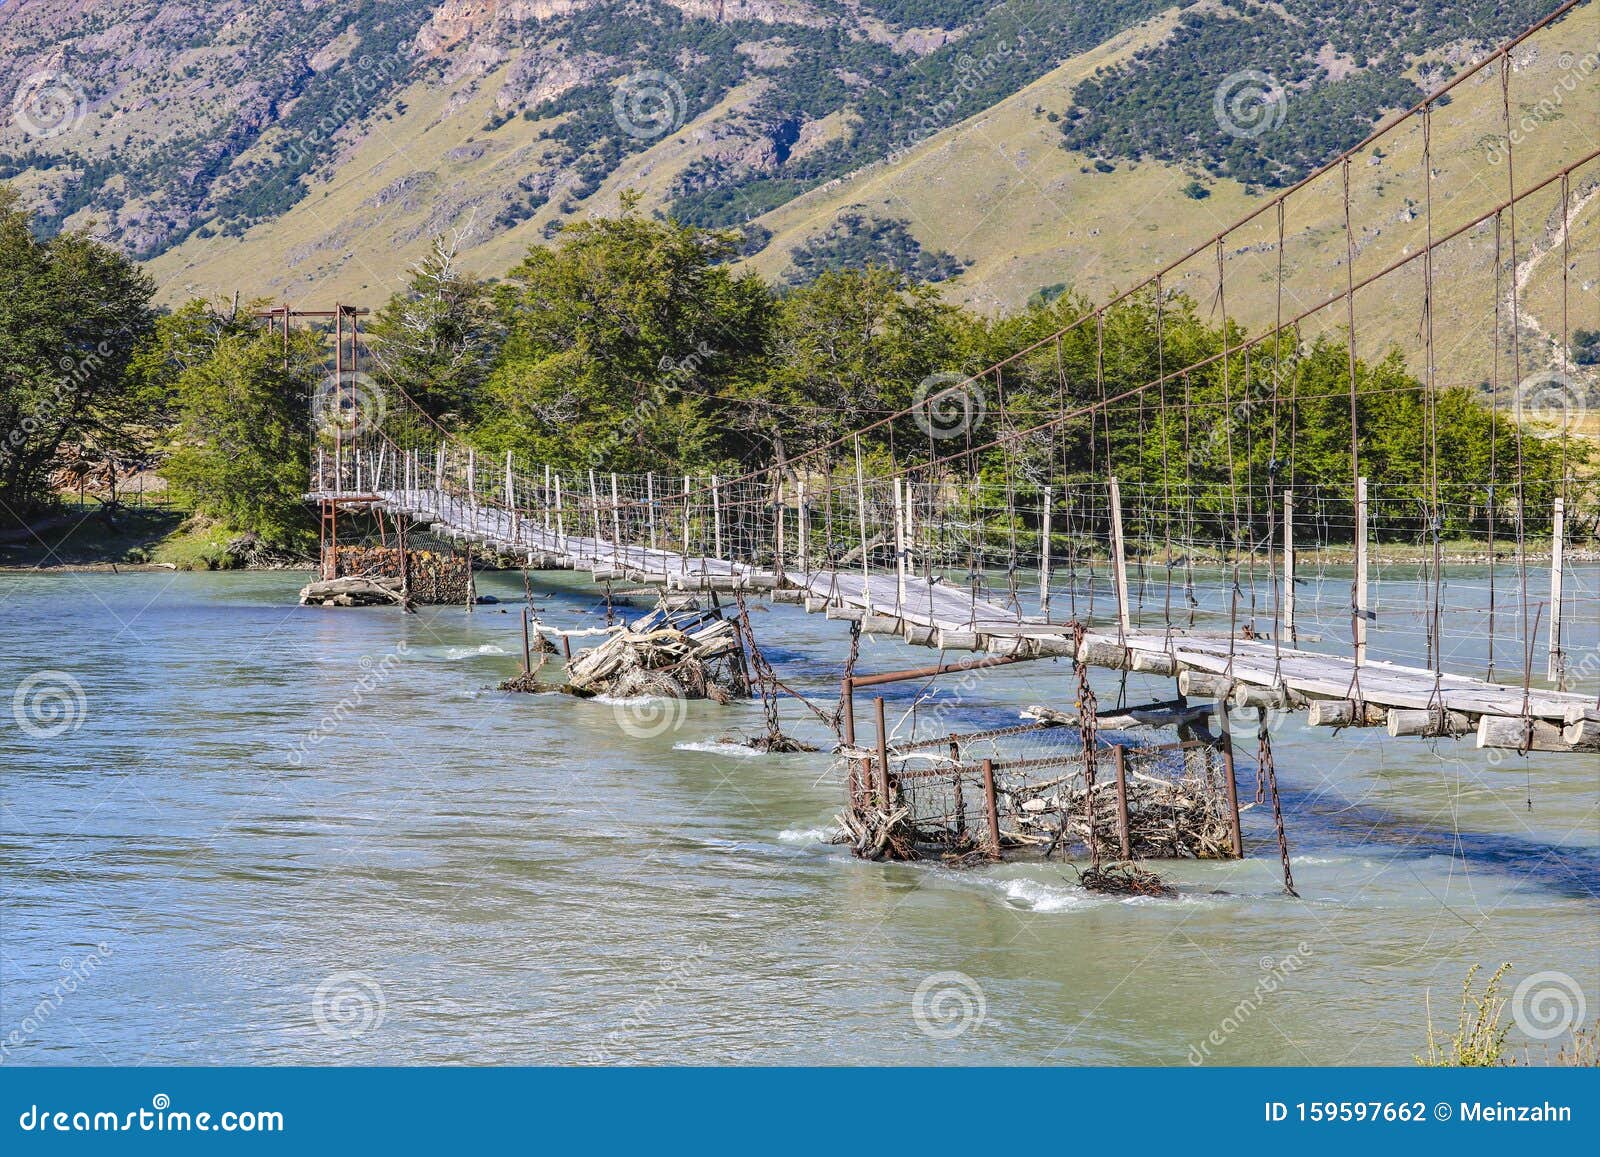 a wooden bridge in patagonia